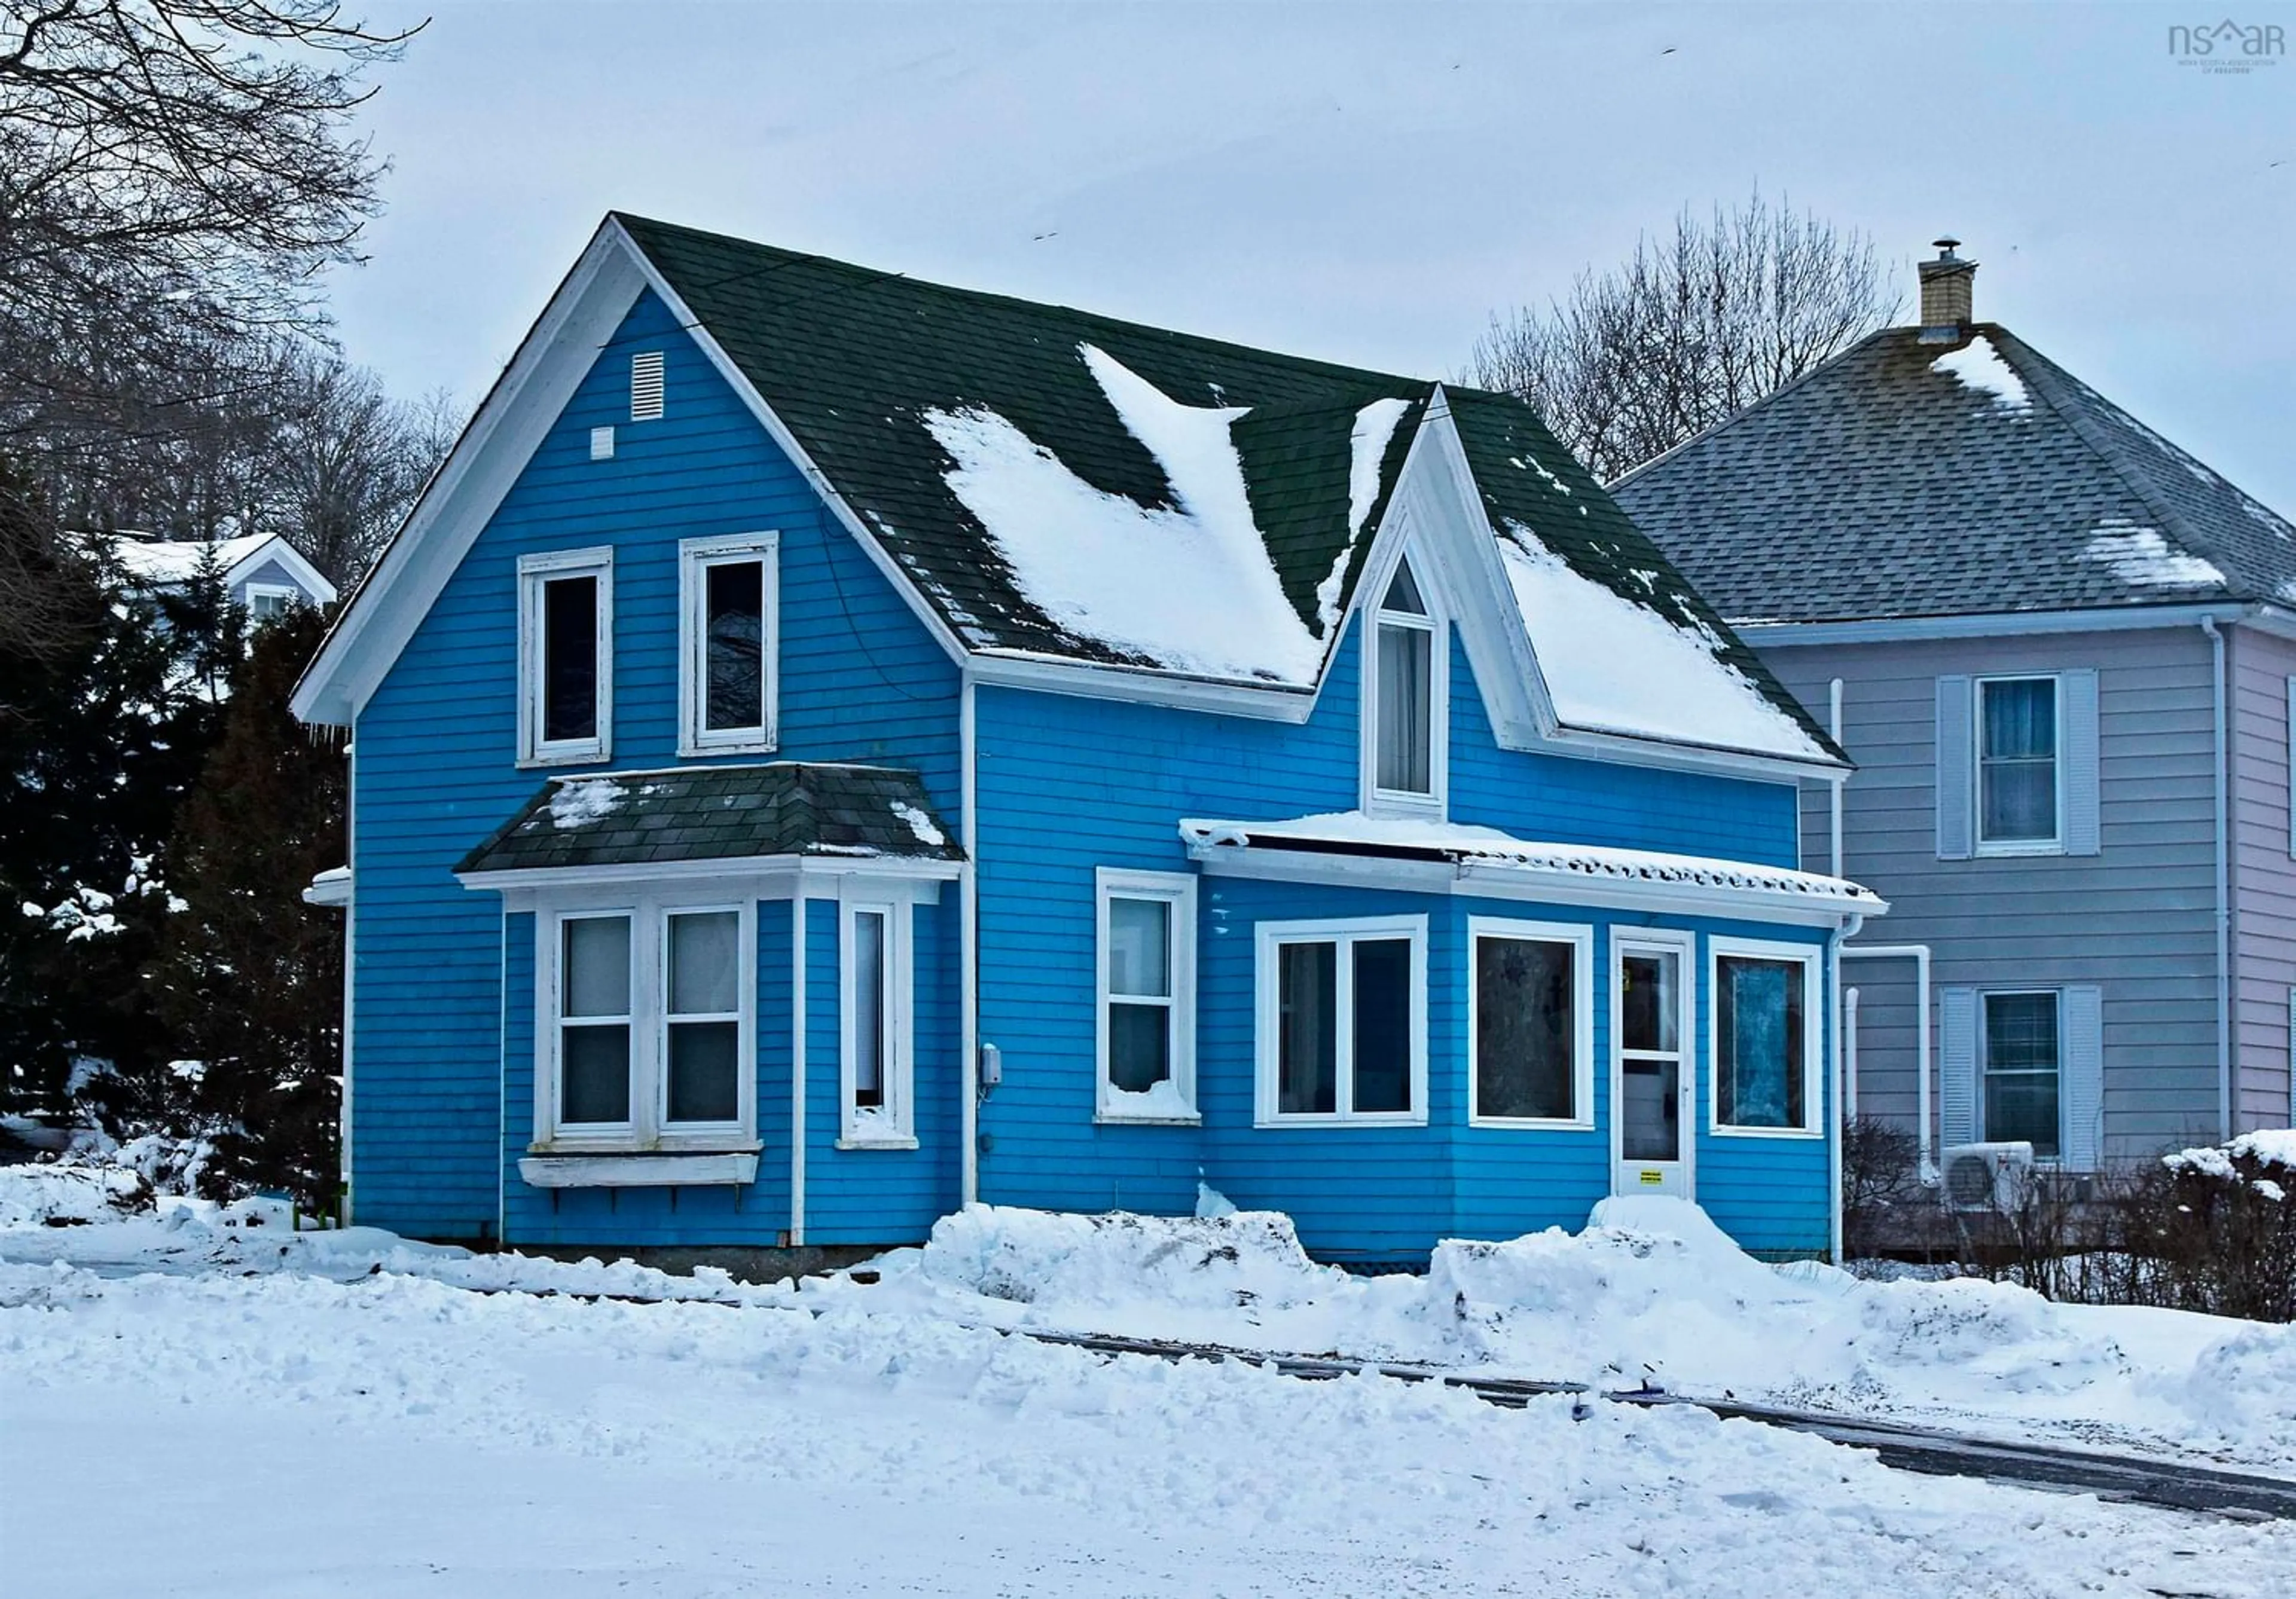 Home with unknown exterior material for 818 Main St, Mahone Bay Nova Scotia B0J 2E0